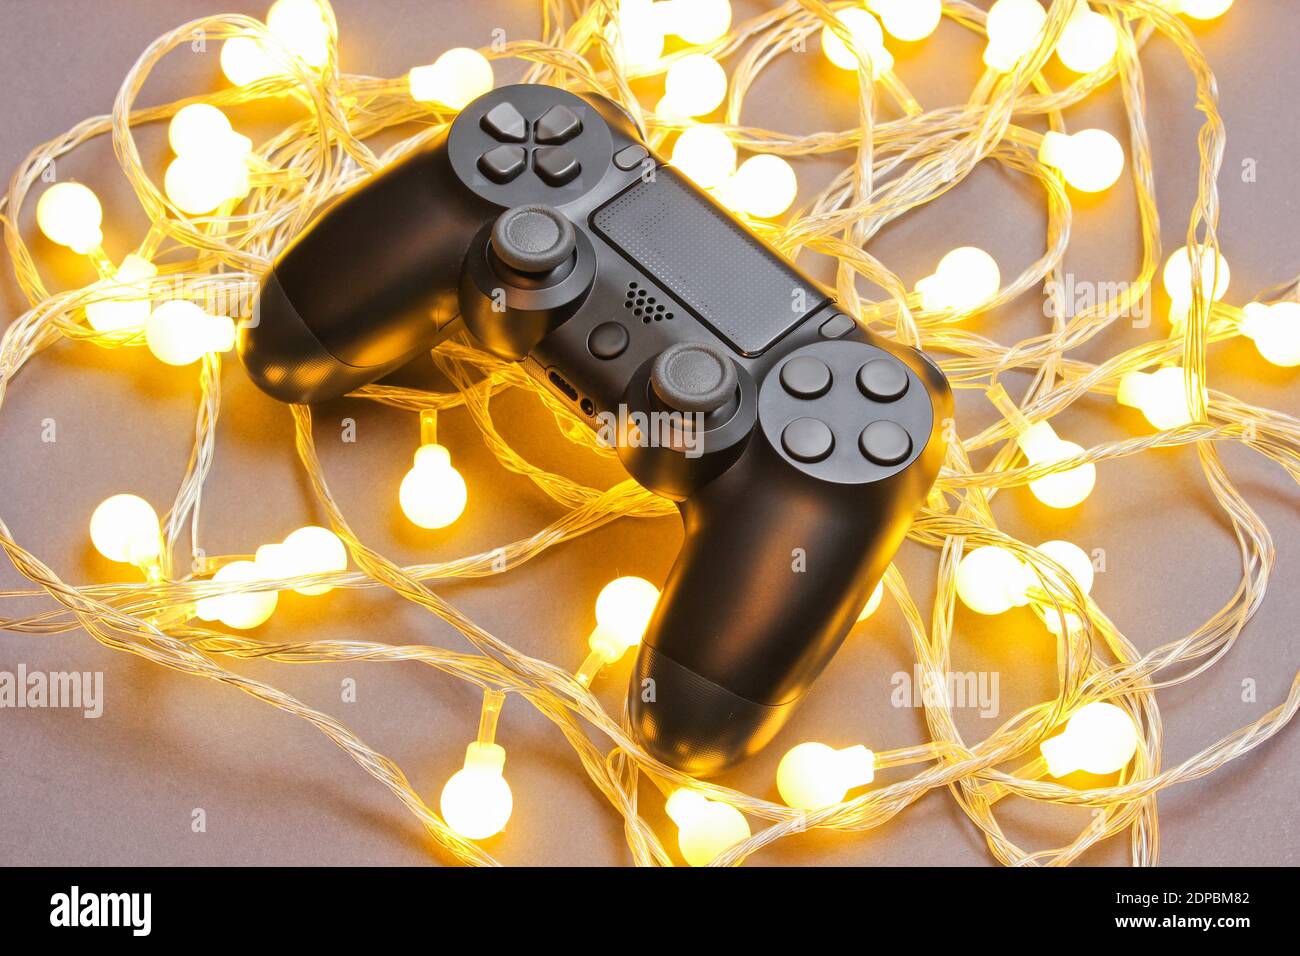 Black plastic gamepad among glowing bright garlands on gray background. Minimalism Stock Photo